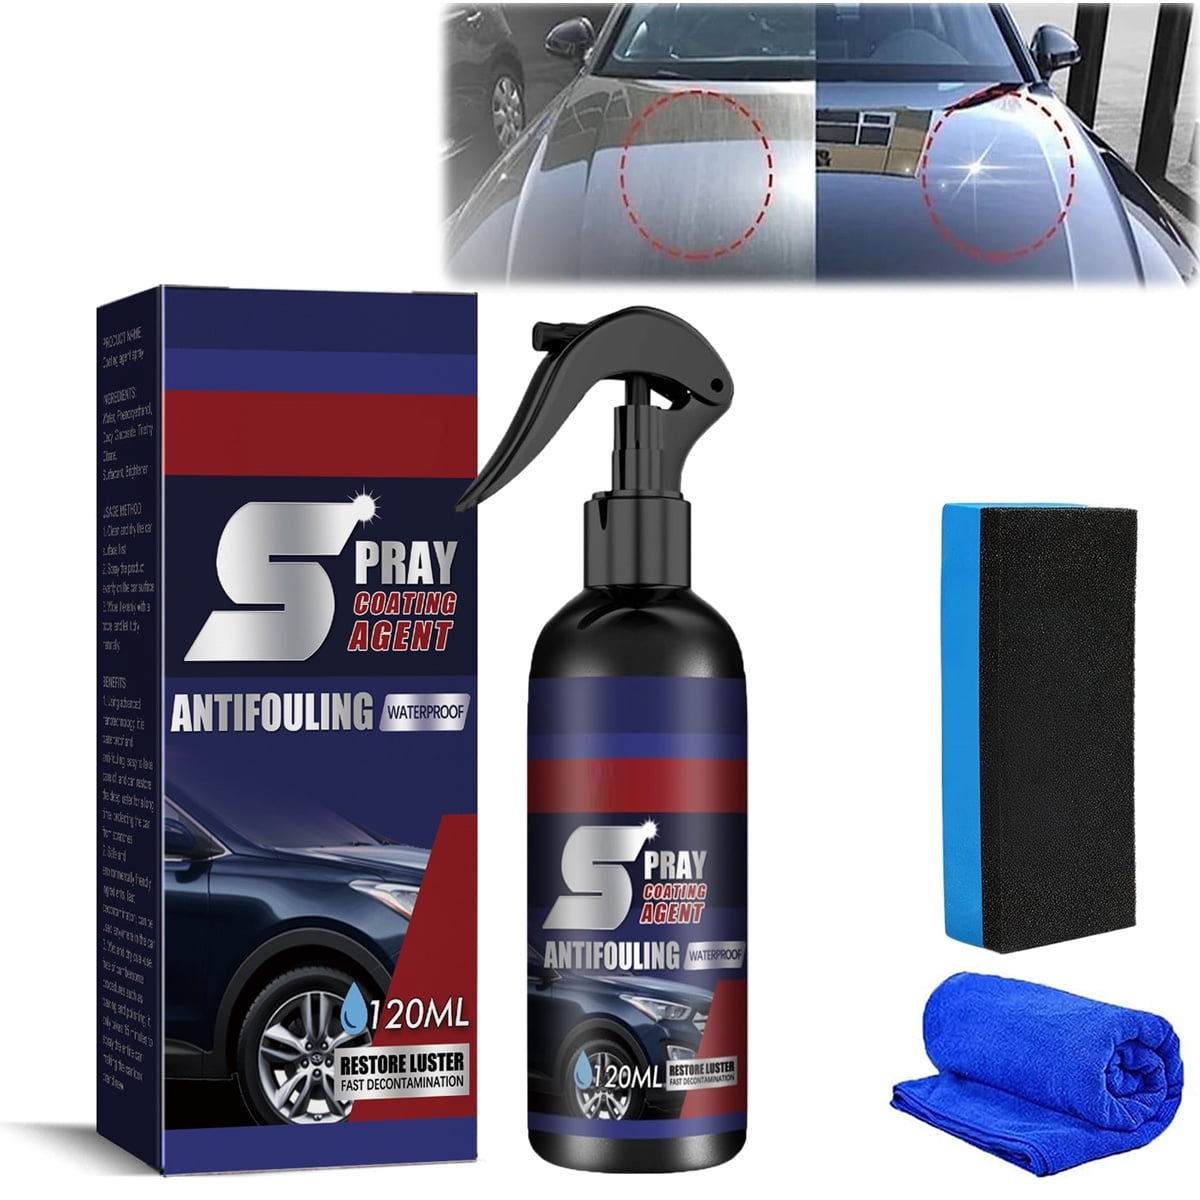 3 in 1 Ceramic Car Coating Spray High Protection